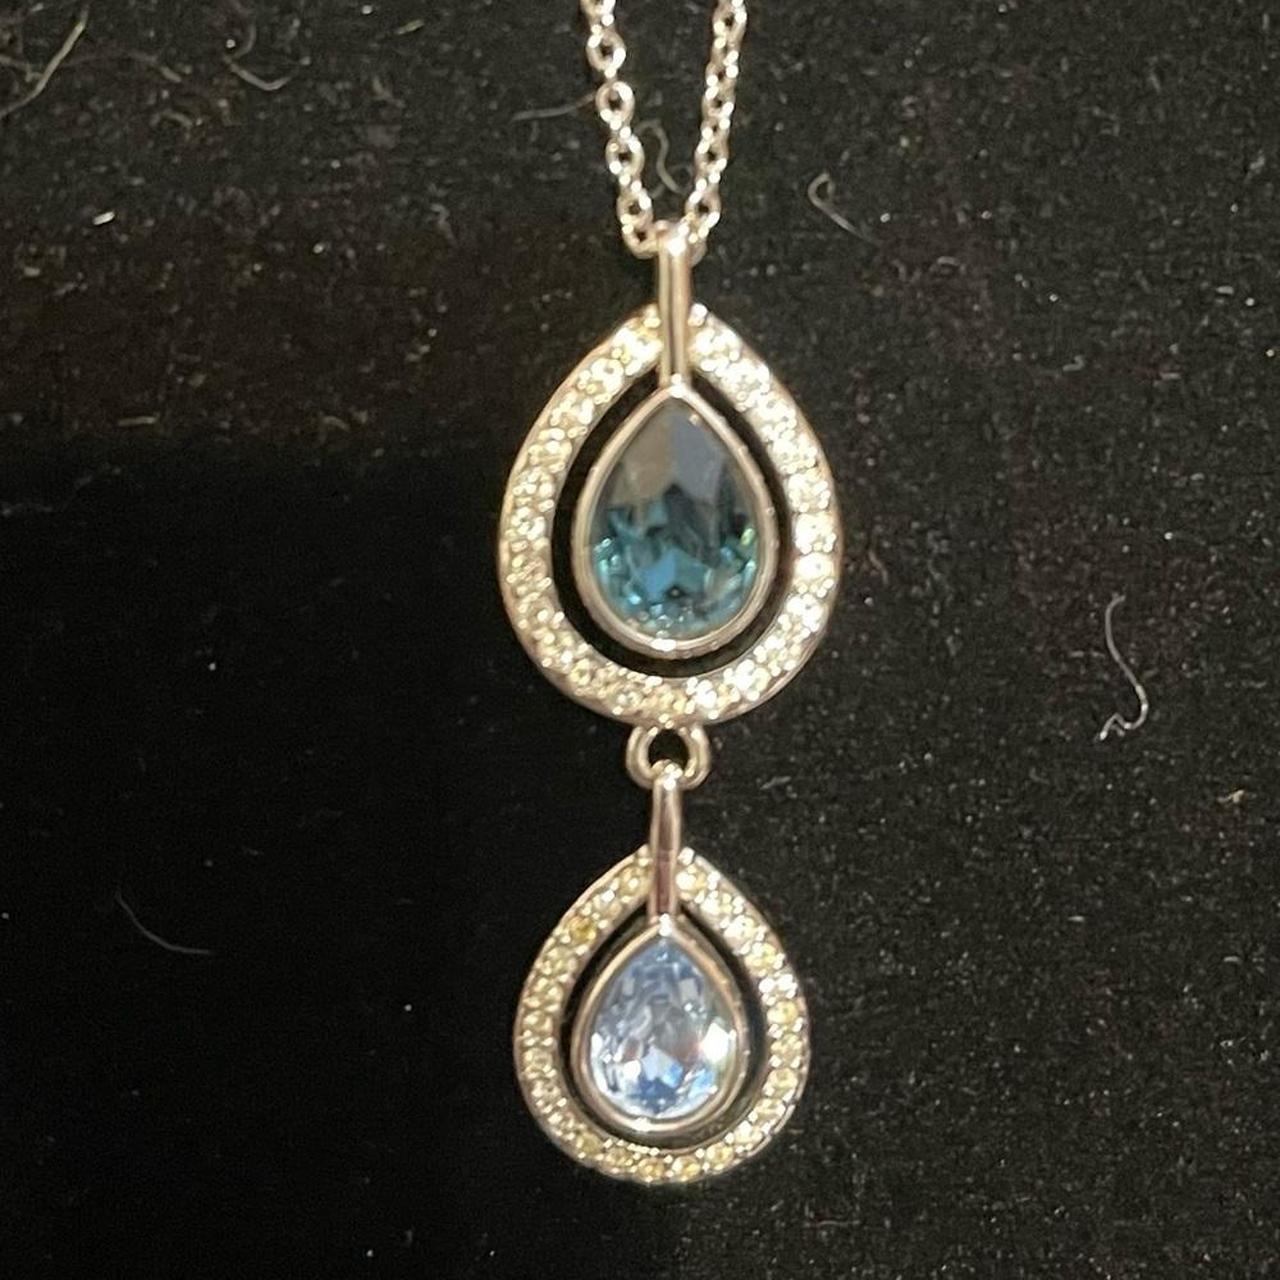 Product Image 3 - Stunning Swarovski Crystal Necklace. 2